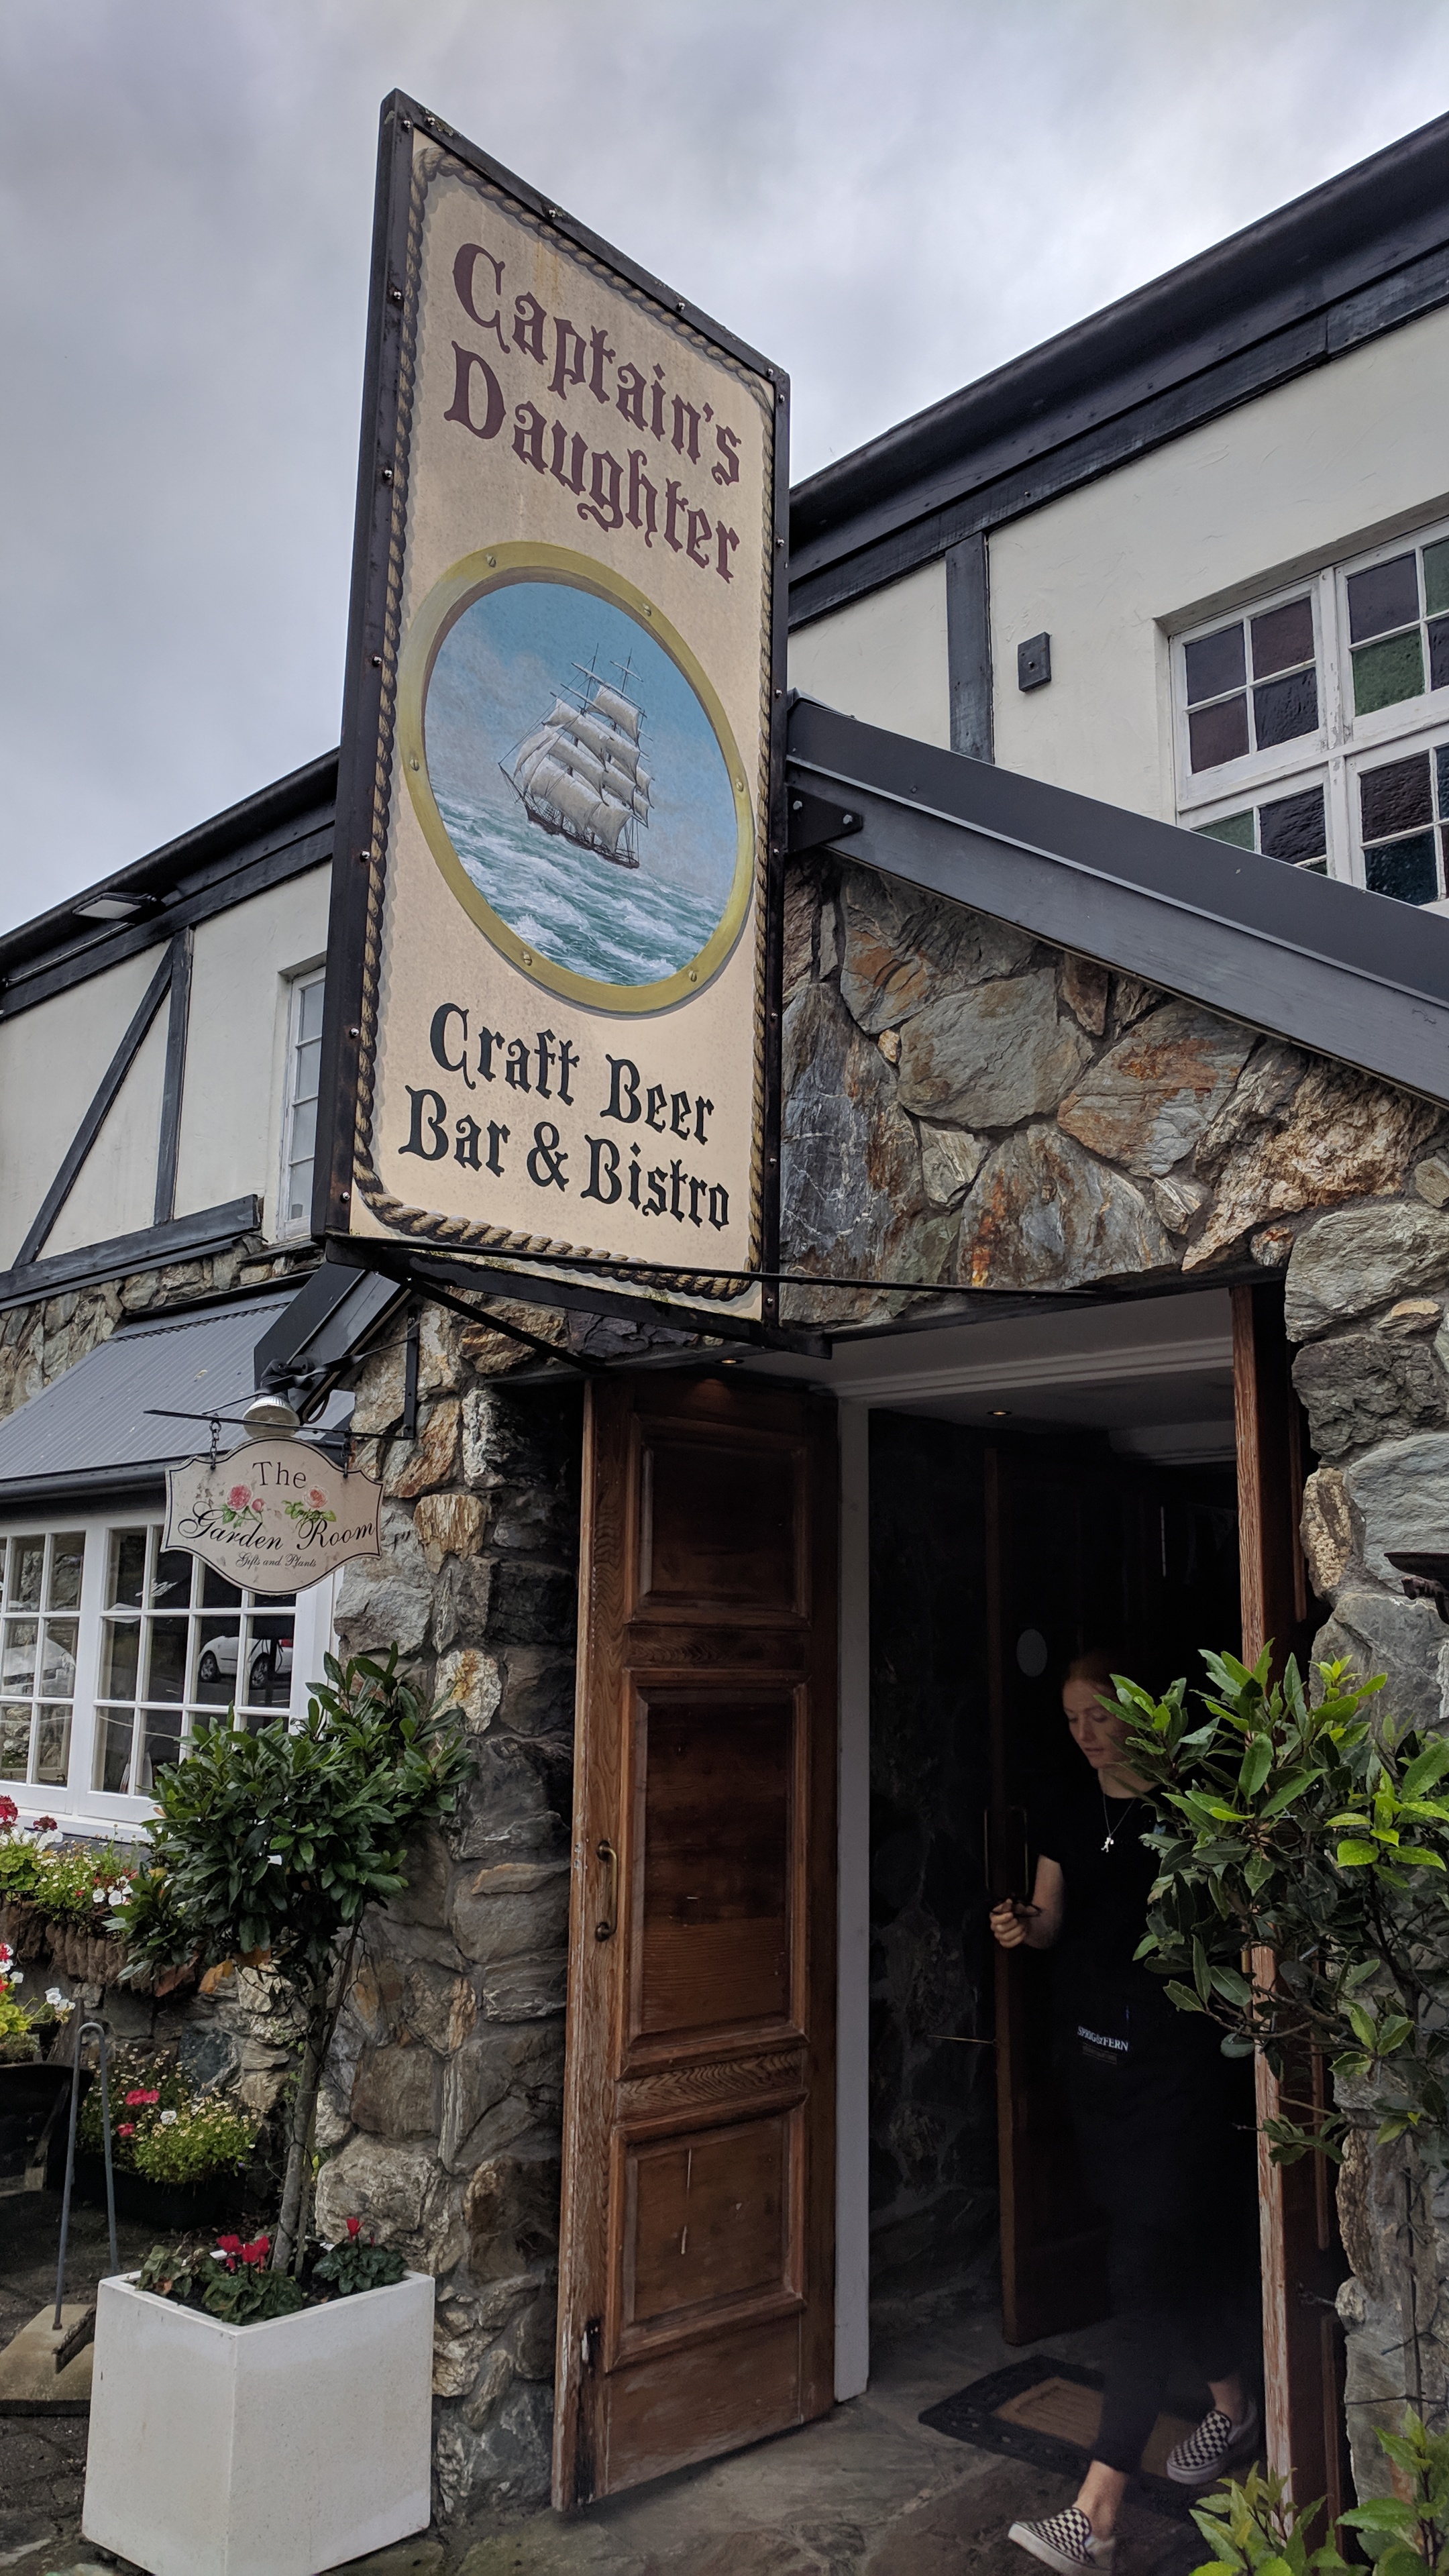 Captain's Daughter pub in Havelock, New Zealand